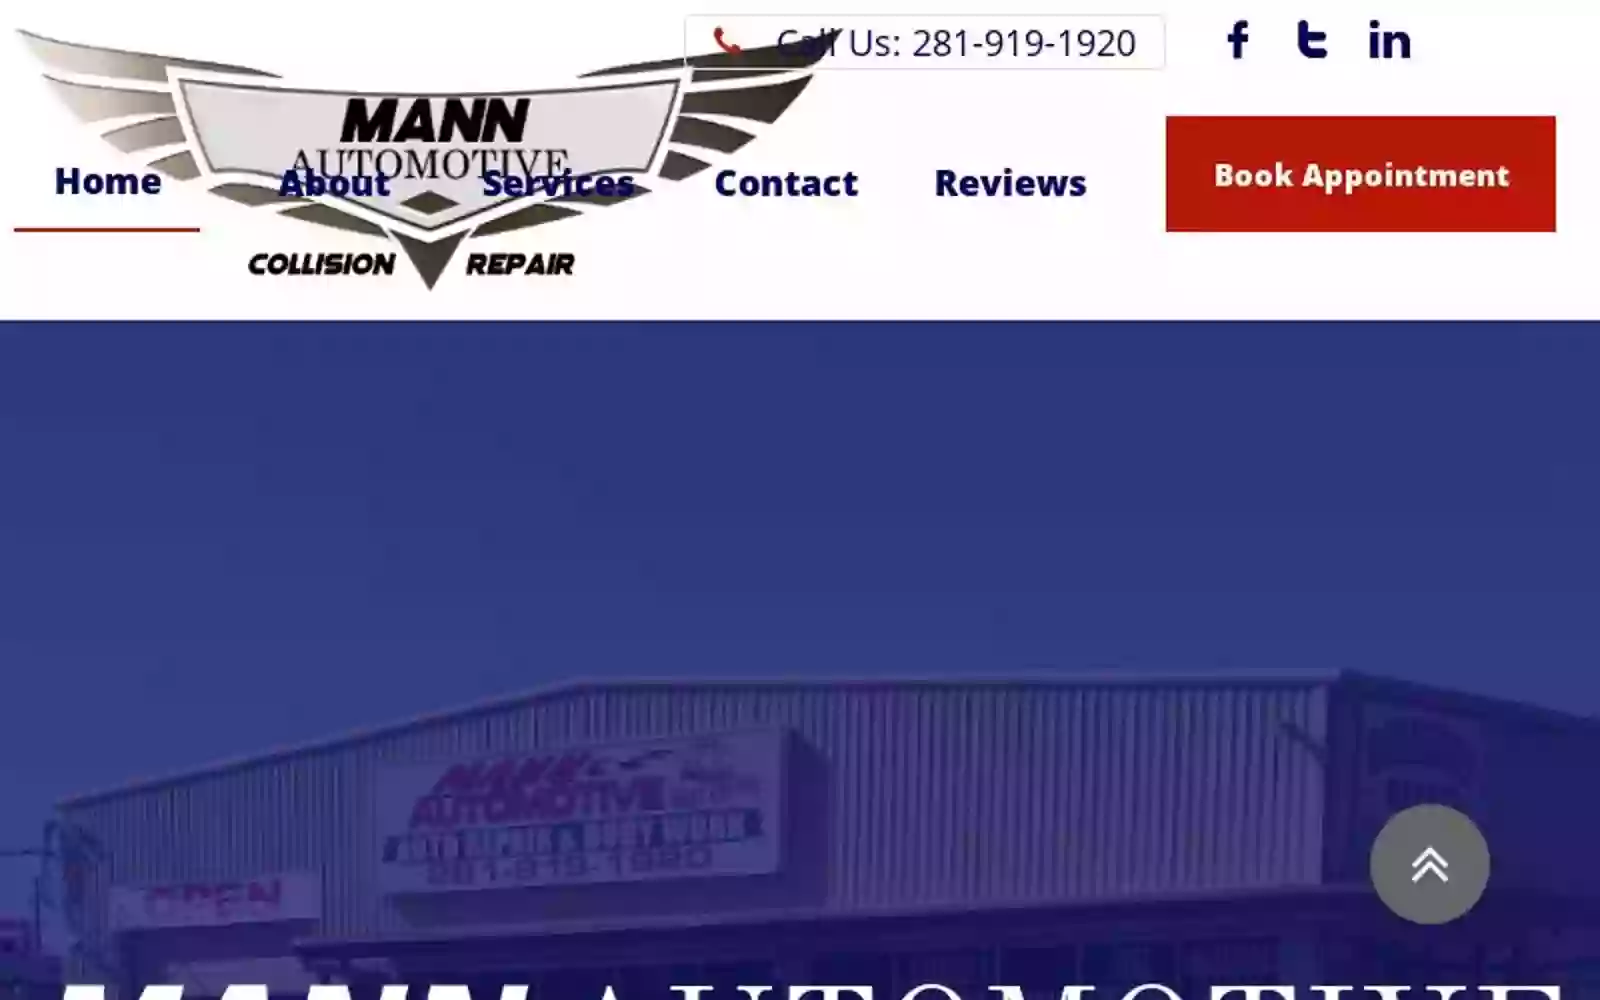 Mann Automotive & Collision Repair